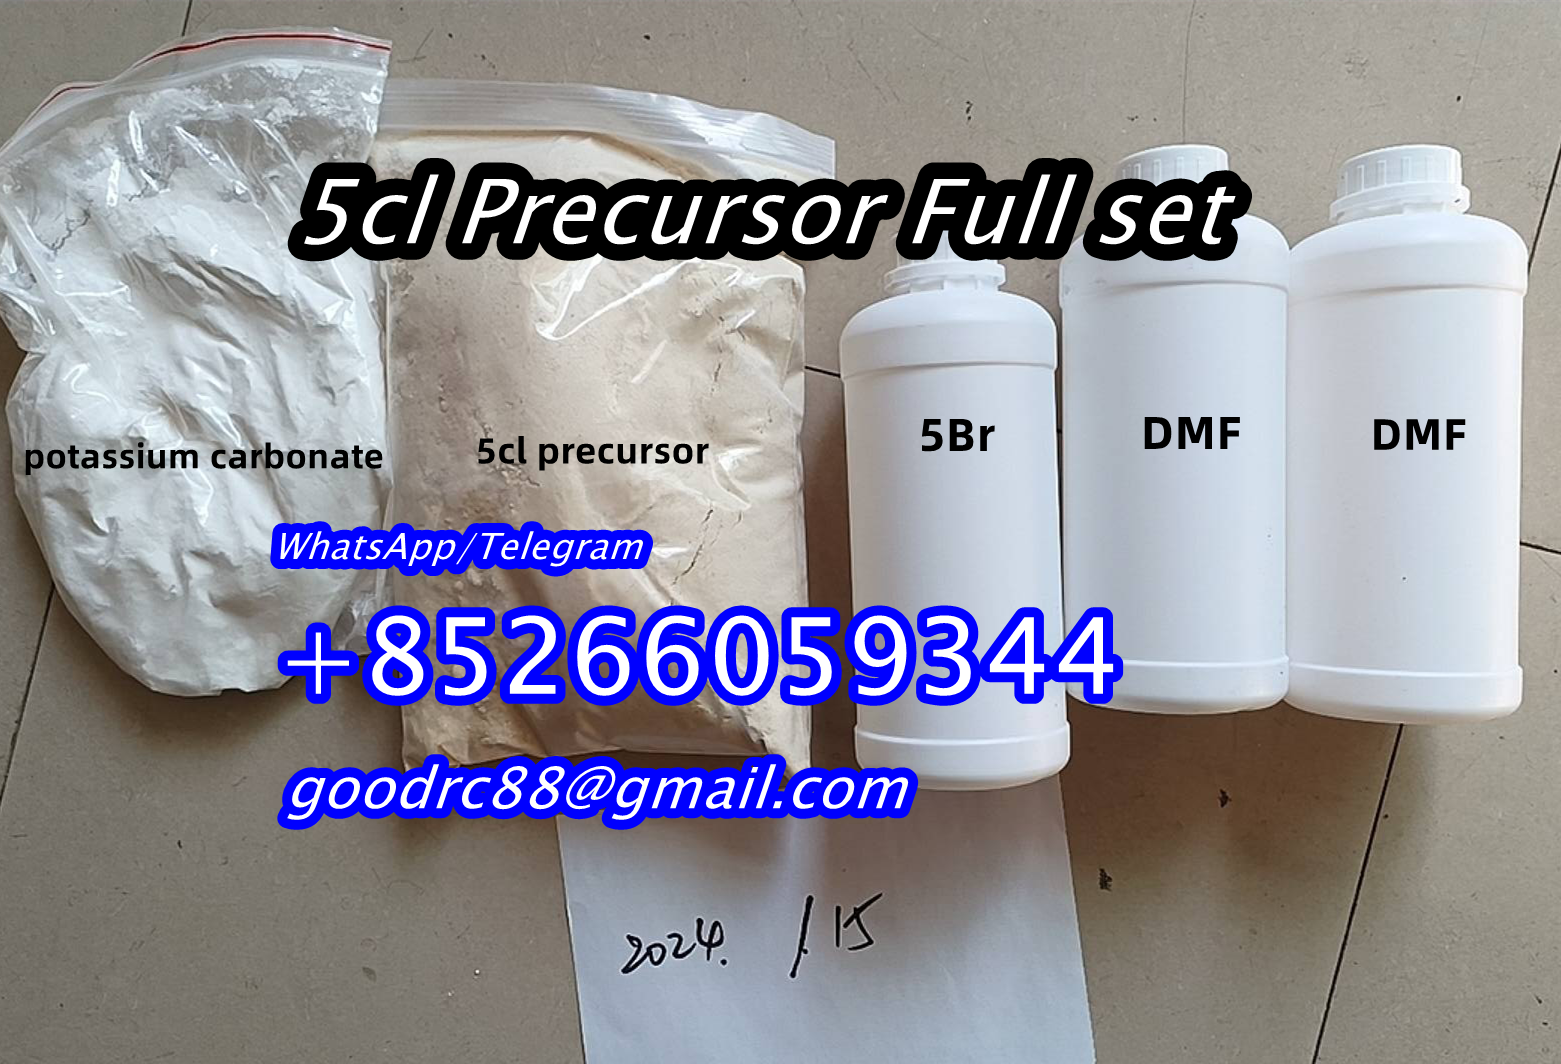 Precursor 5cl-adb 5cladba raw materials for sale whatsapp +85266059344